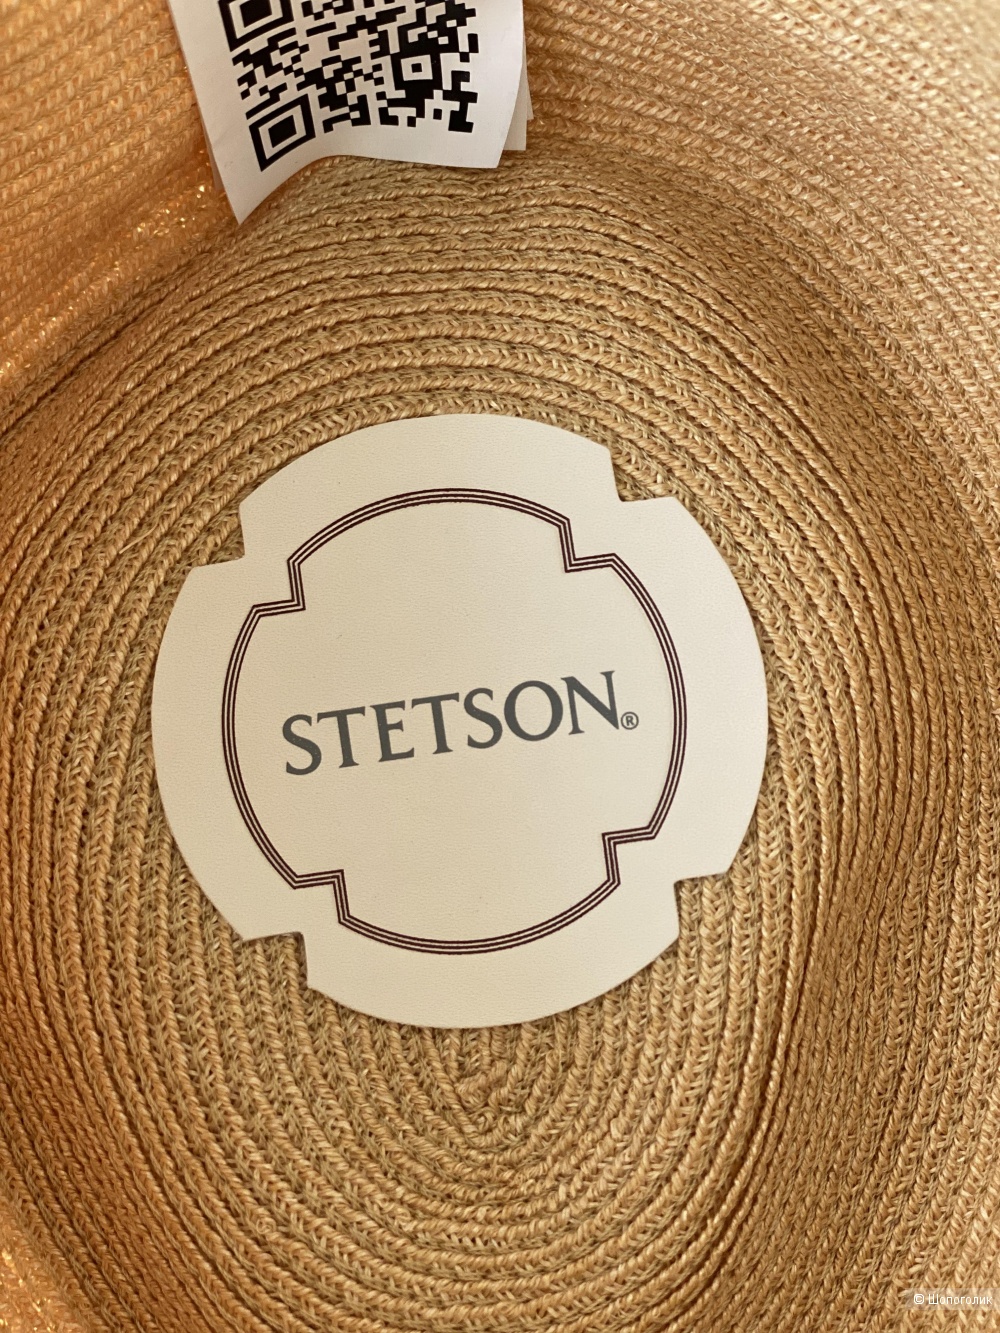 Шляпа Stetson размер s